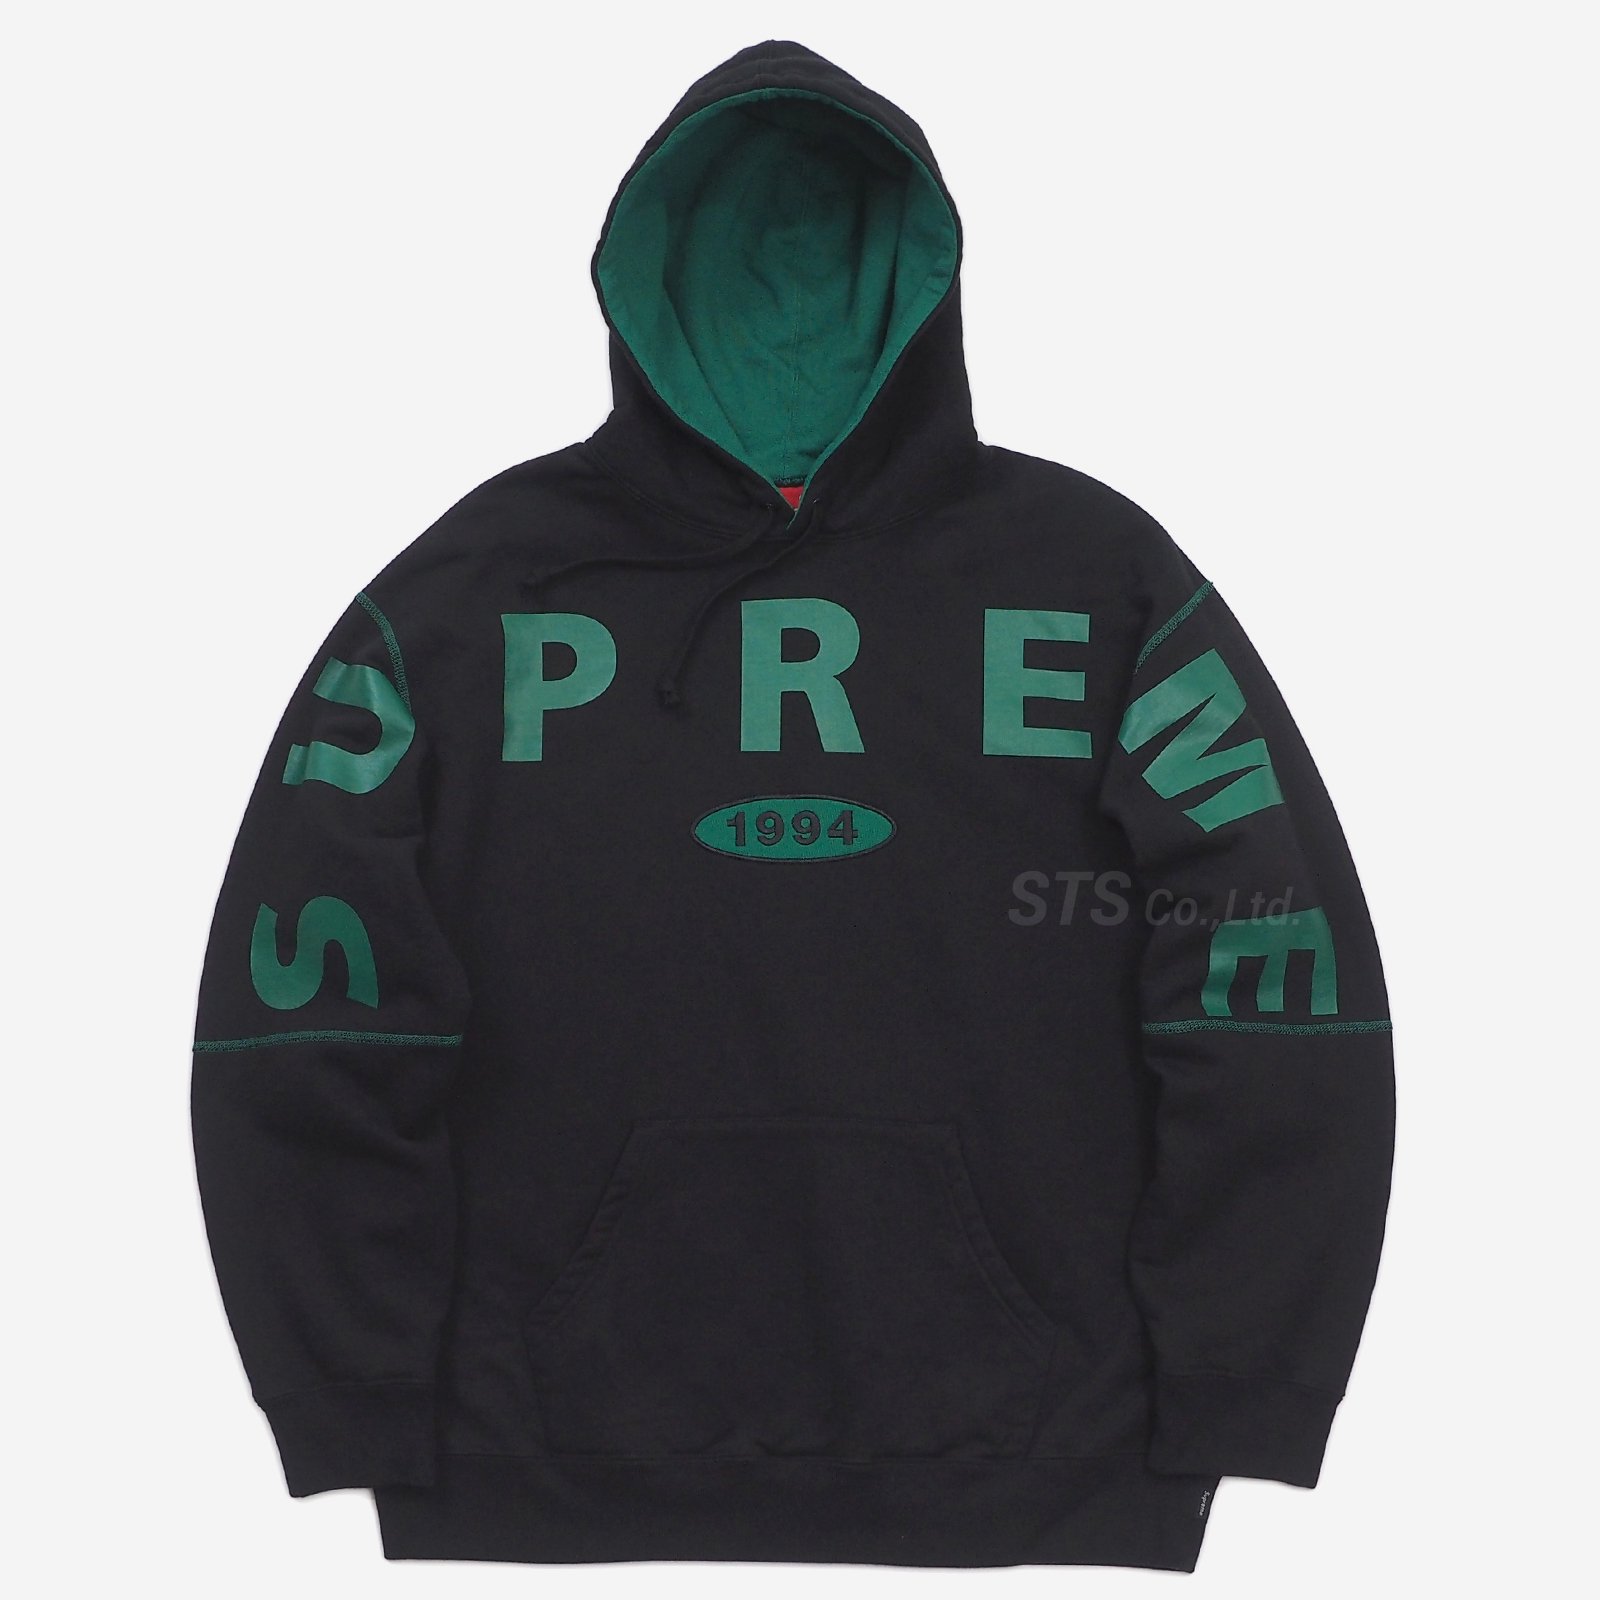 Supreme Spread Logo Hooded Sweatshirt